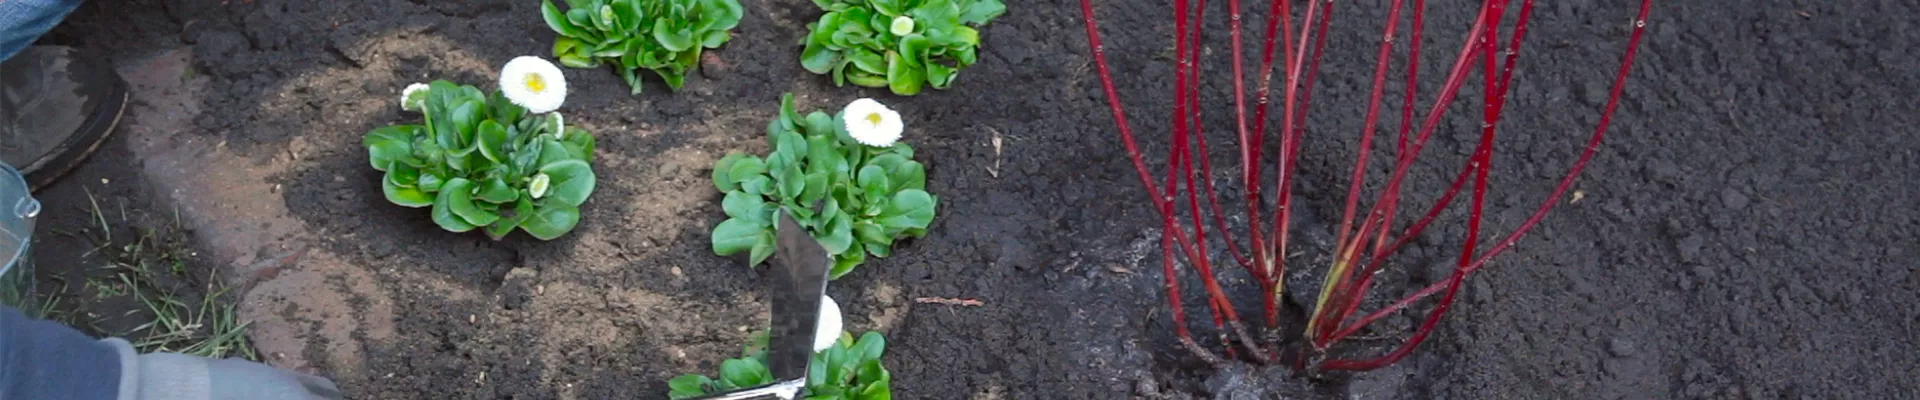 Gänseblümchen - Einpflanzen im Garten (thumbnail)